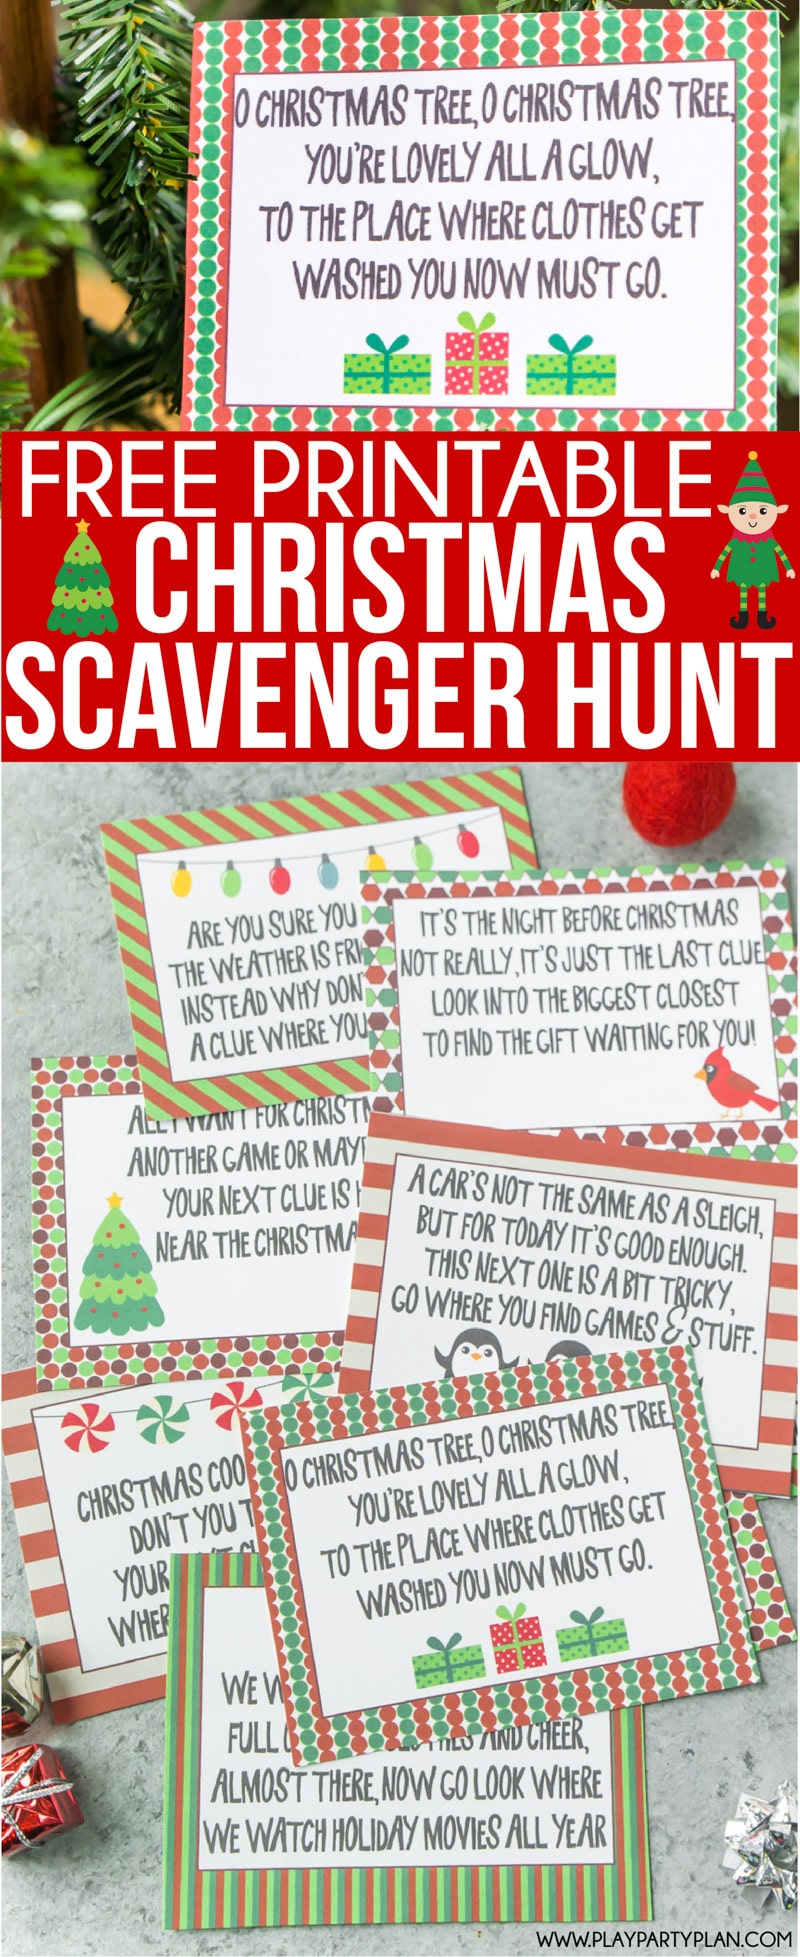 Christmas Eve Scavenger Hunt Ideas